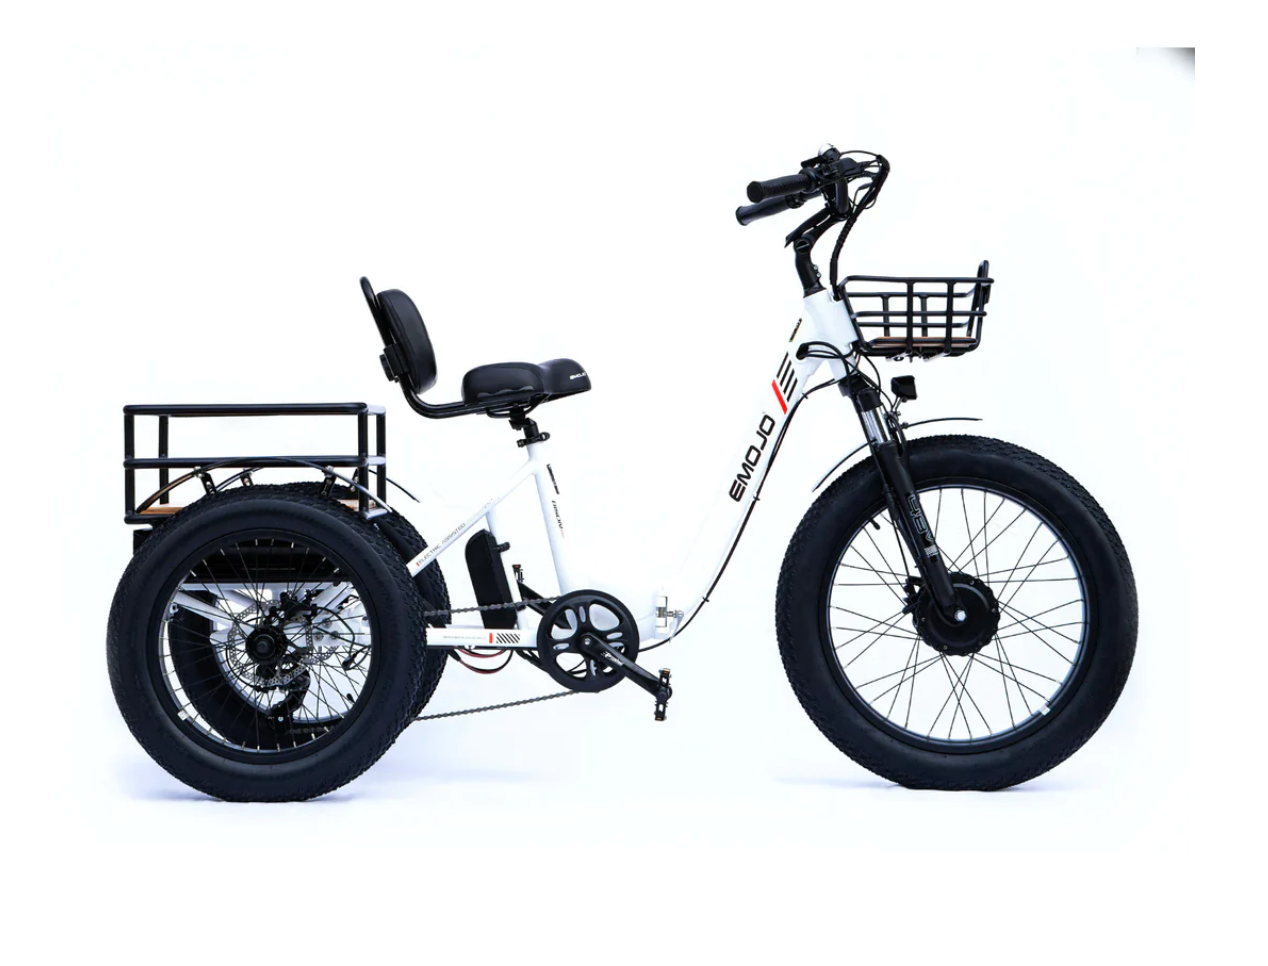 Emojo Bison Pro Folding Electric Trike Bike VALENTINES BONUS